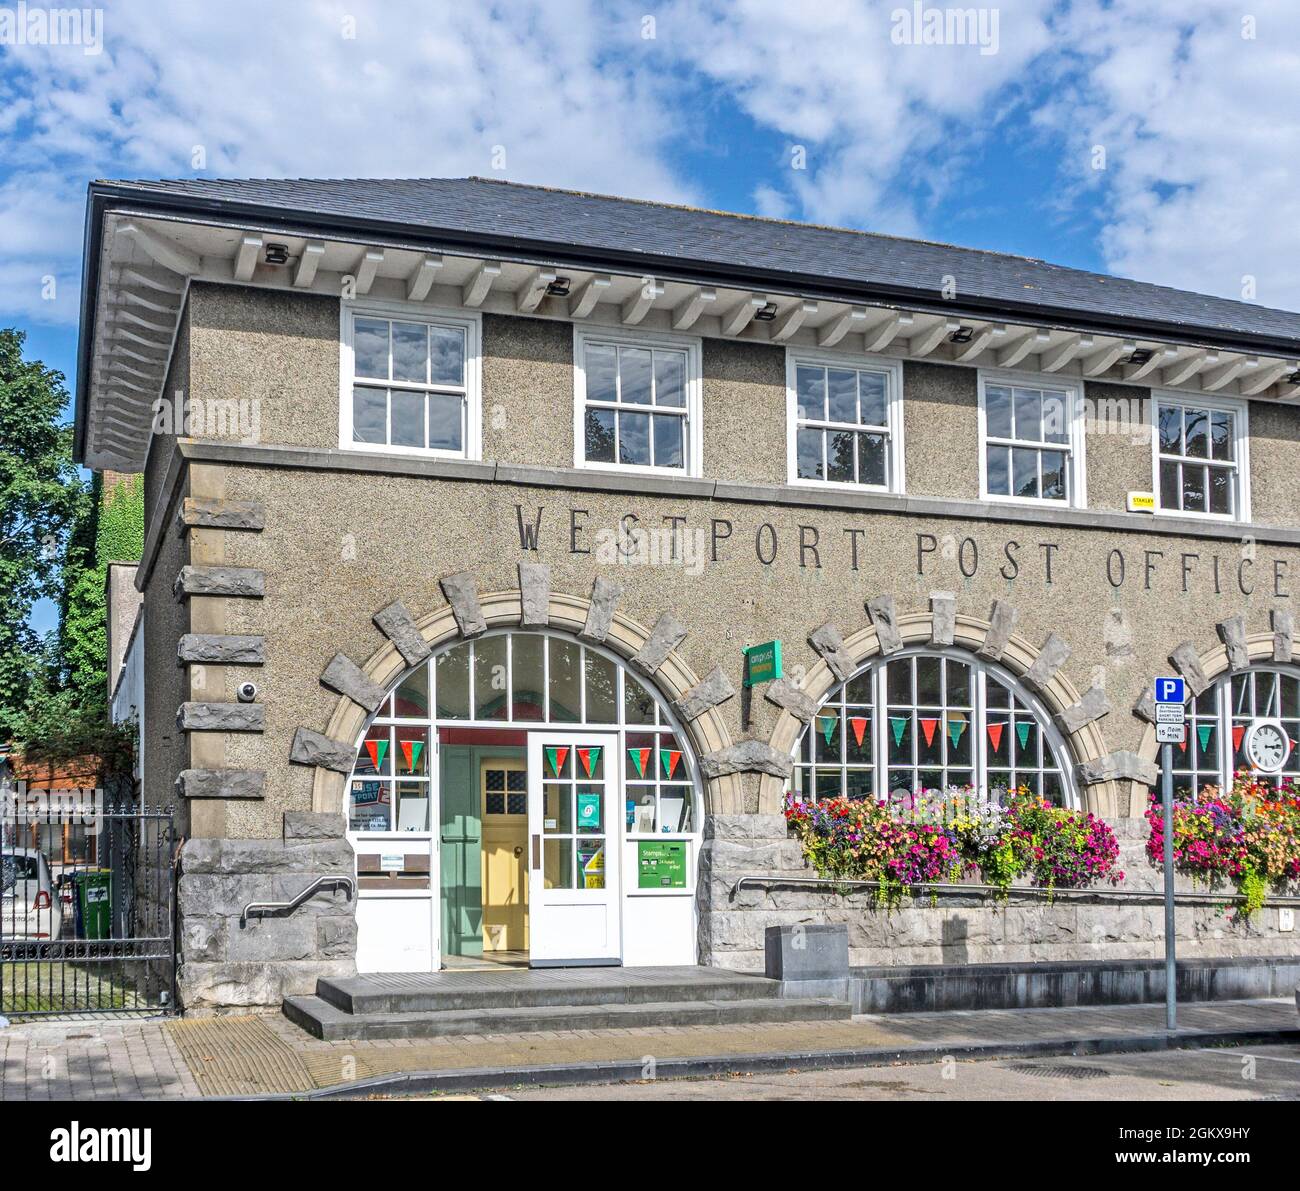 Westport Post Office, Westport, County Mayo, Irlanda. Fornire servizi postali, finanziari e governativi. Foto Stock